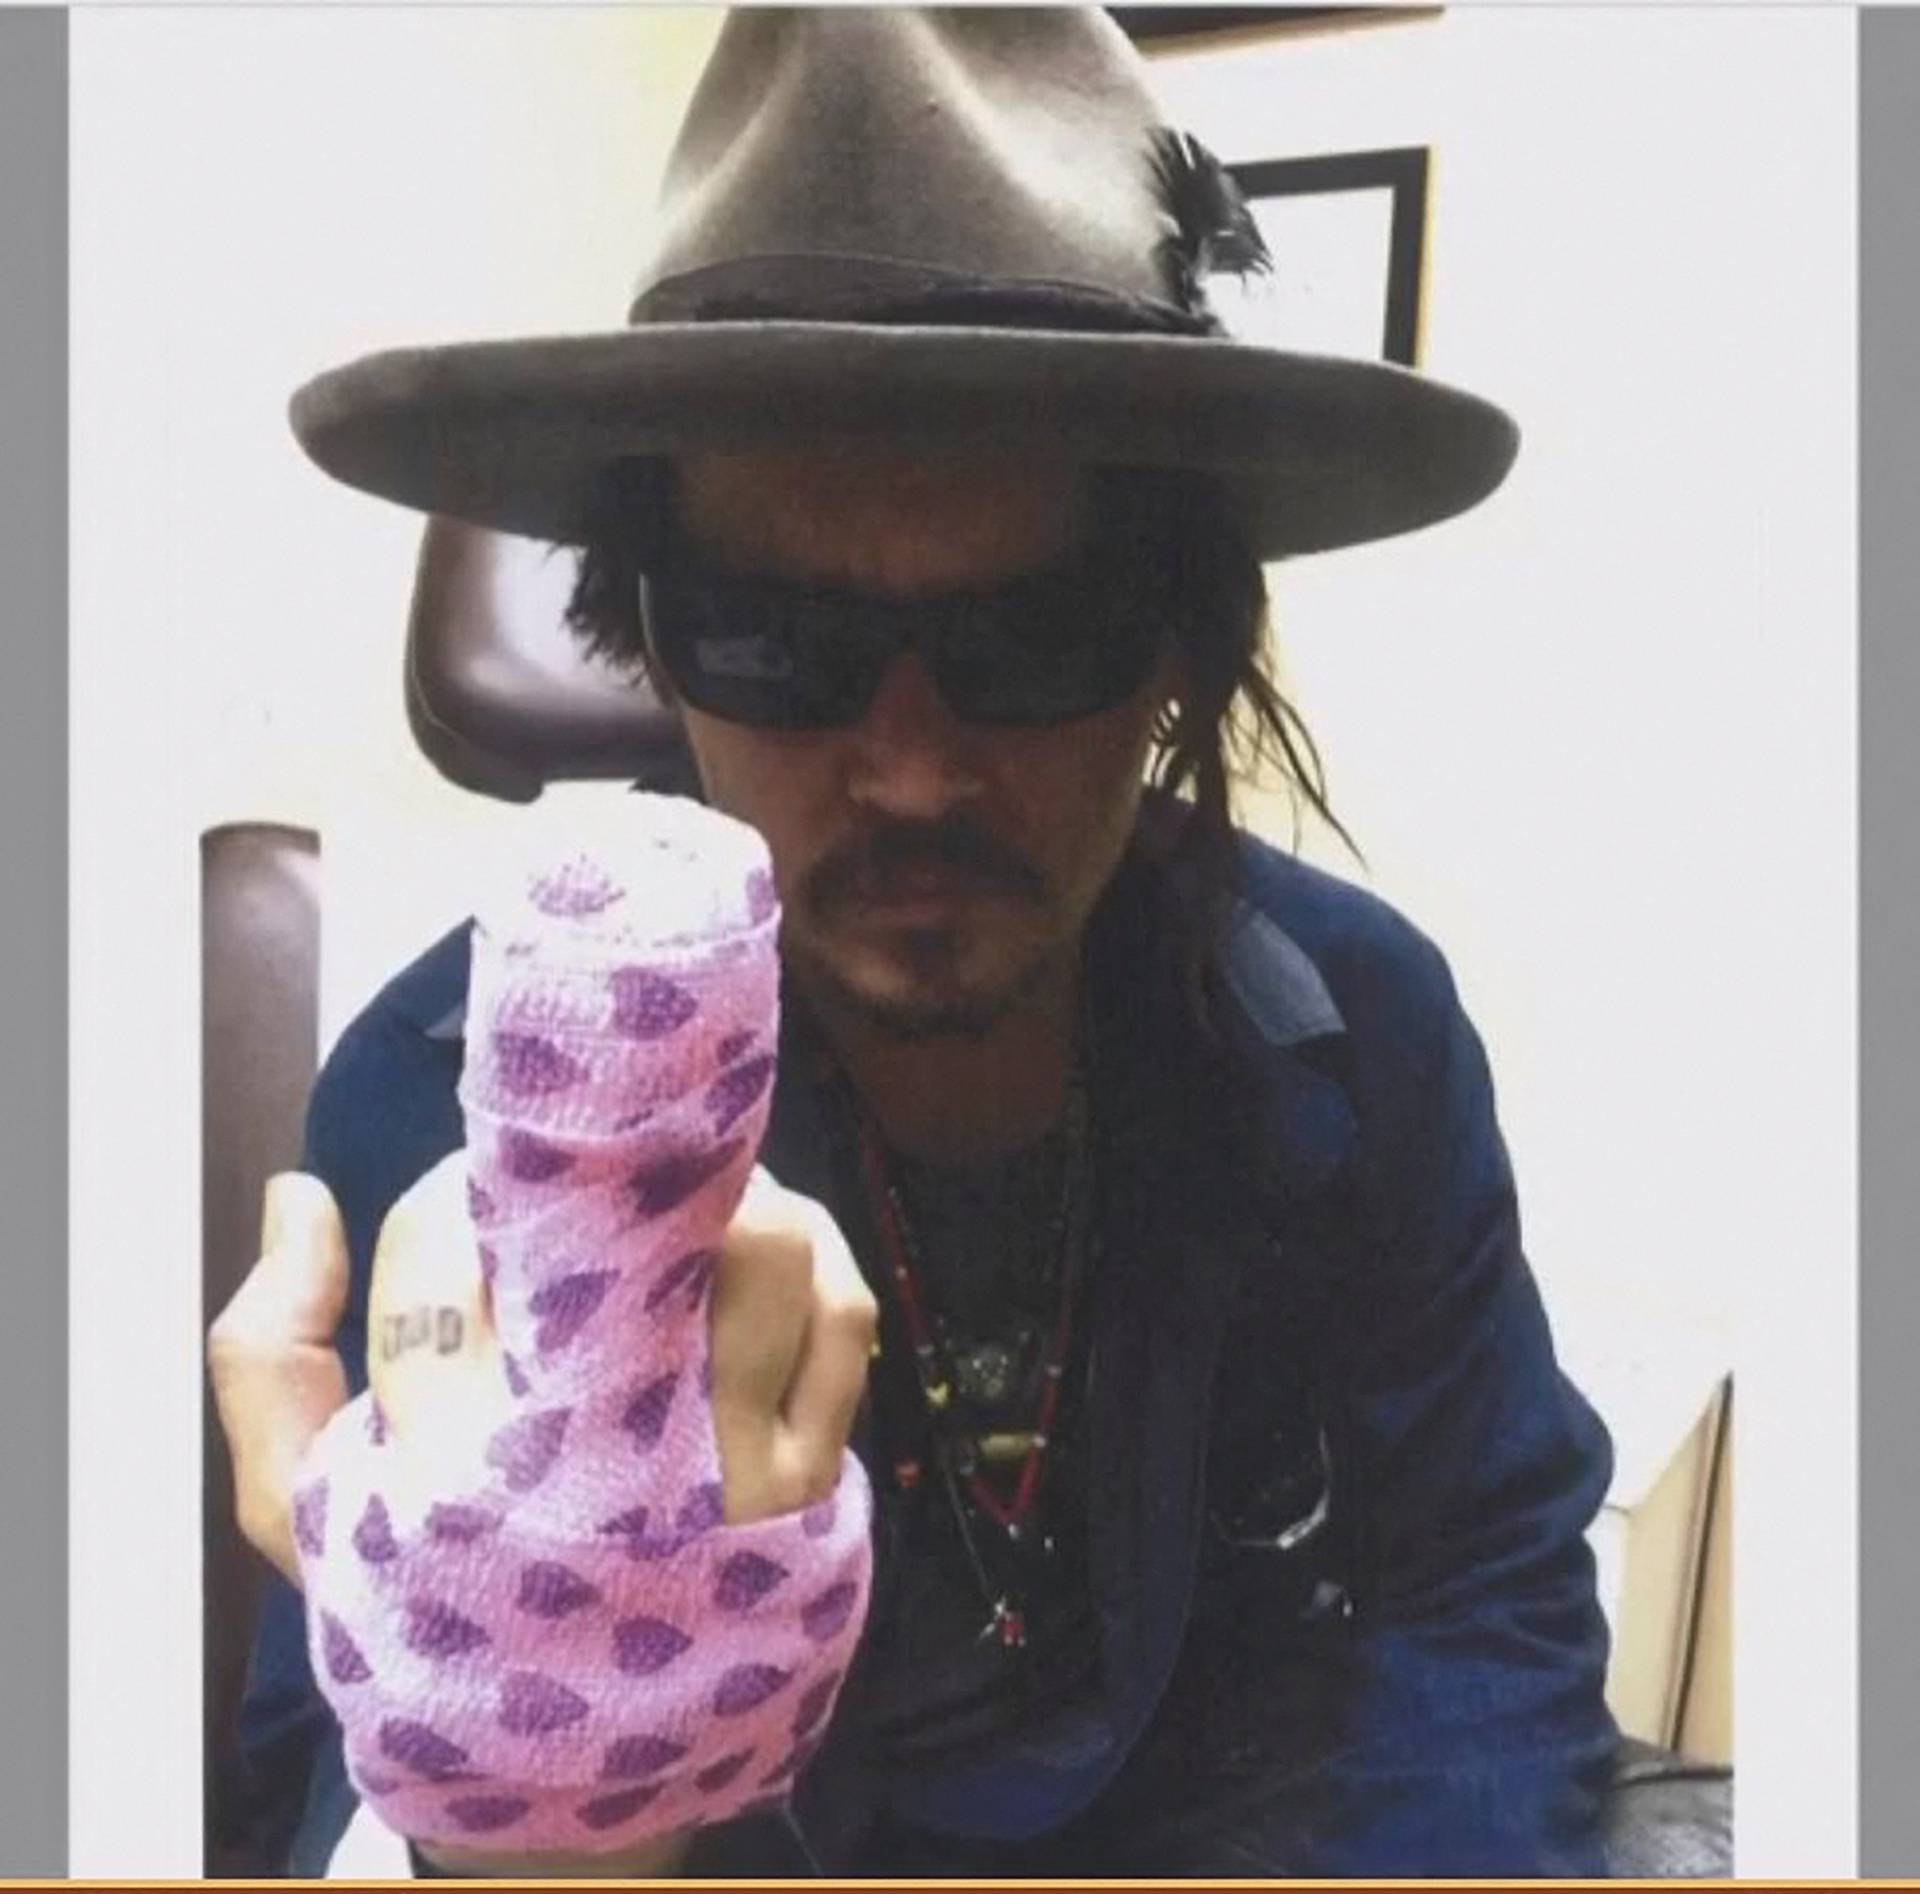 Courtroom evidence photograh shows actor Johnny Depp and bandaged finger